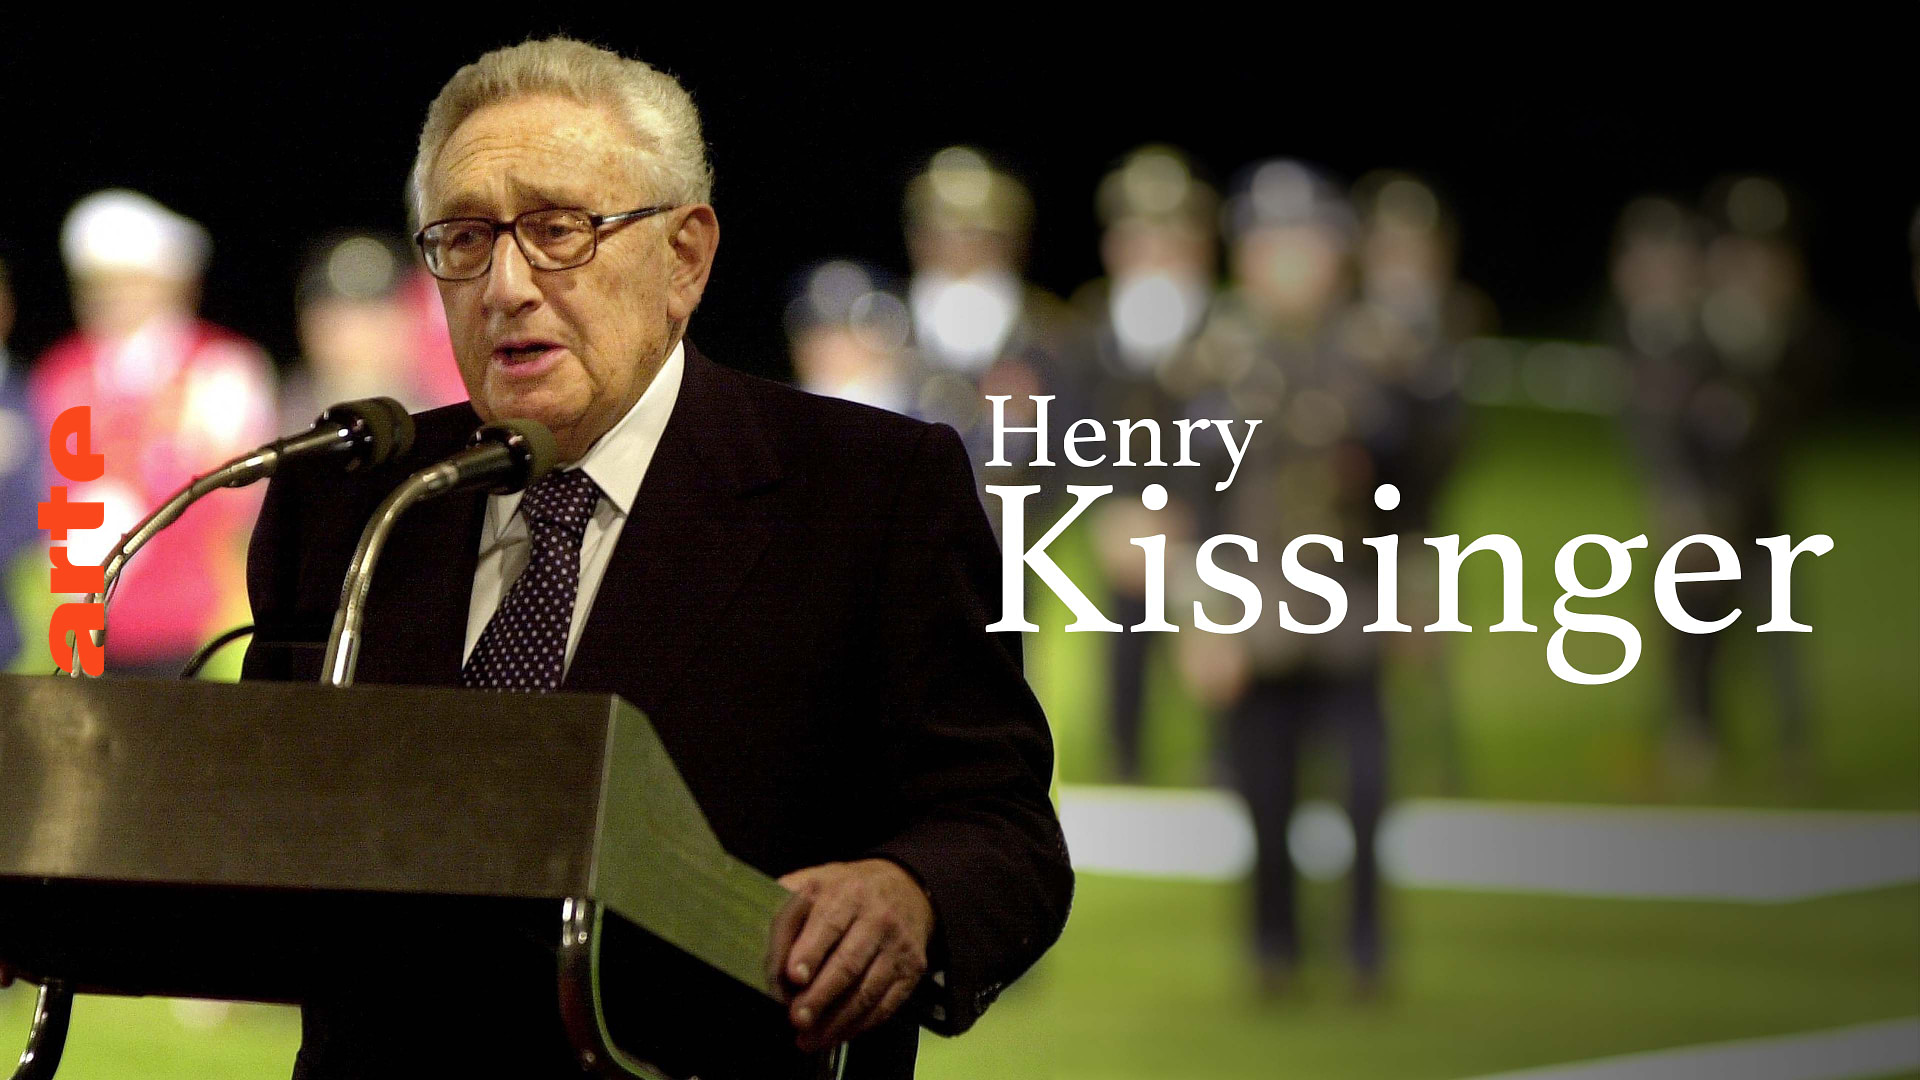 El inevitable Sr. Kissinger – Ver el documental completo